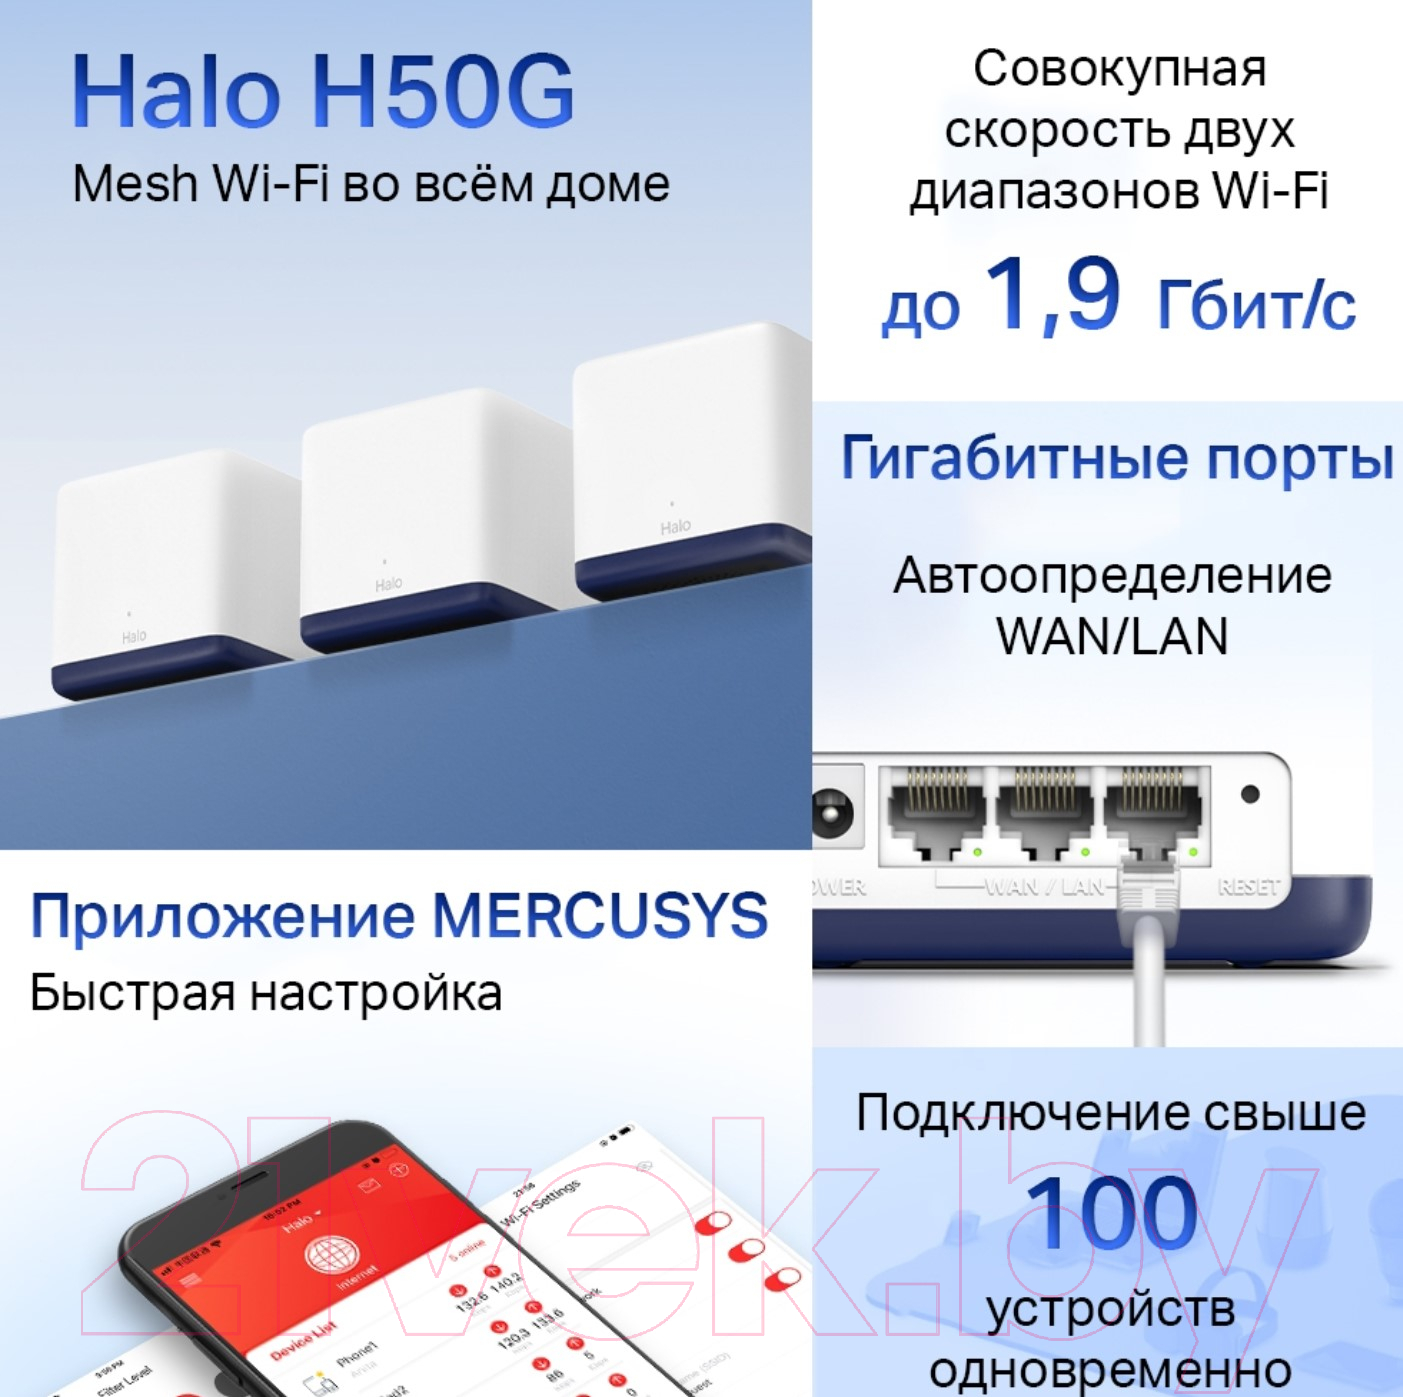 Комплект беспроводных маршрутизаторов Mercusys Halo H50G